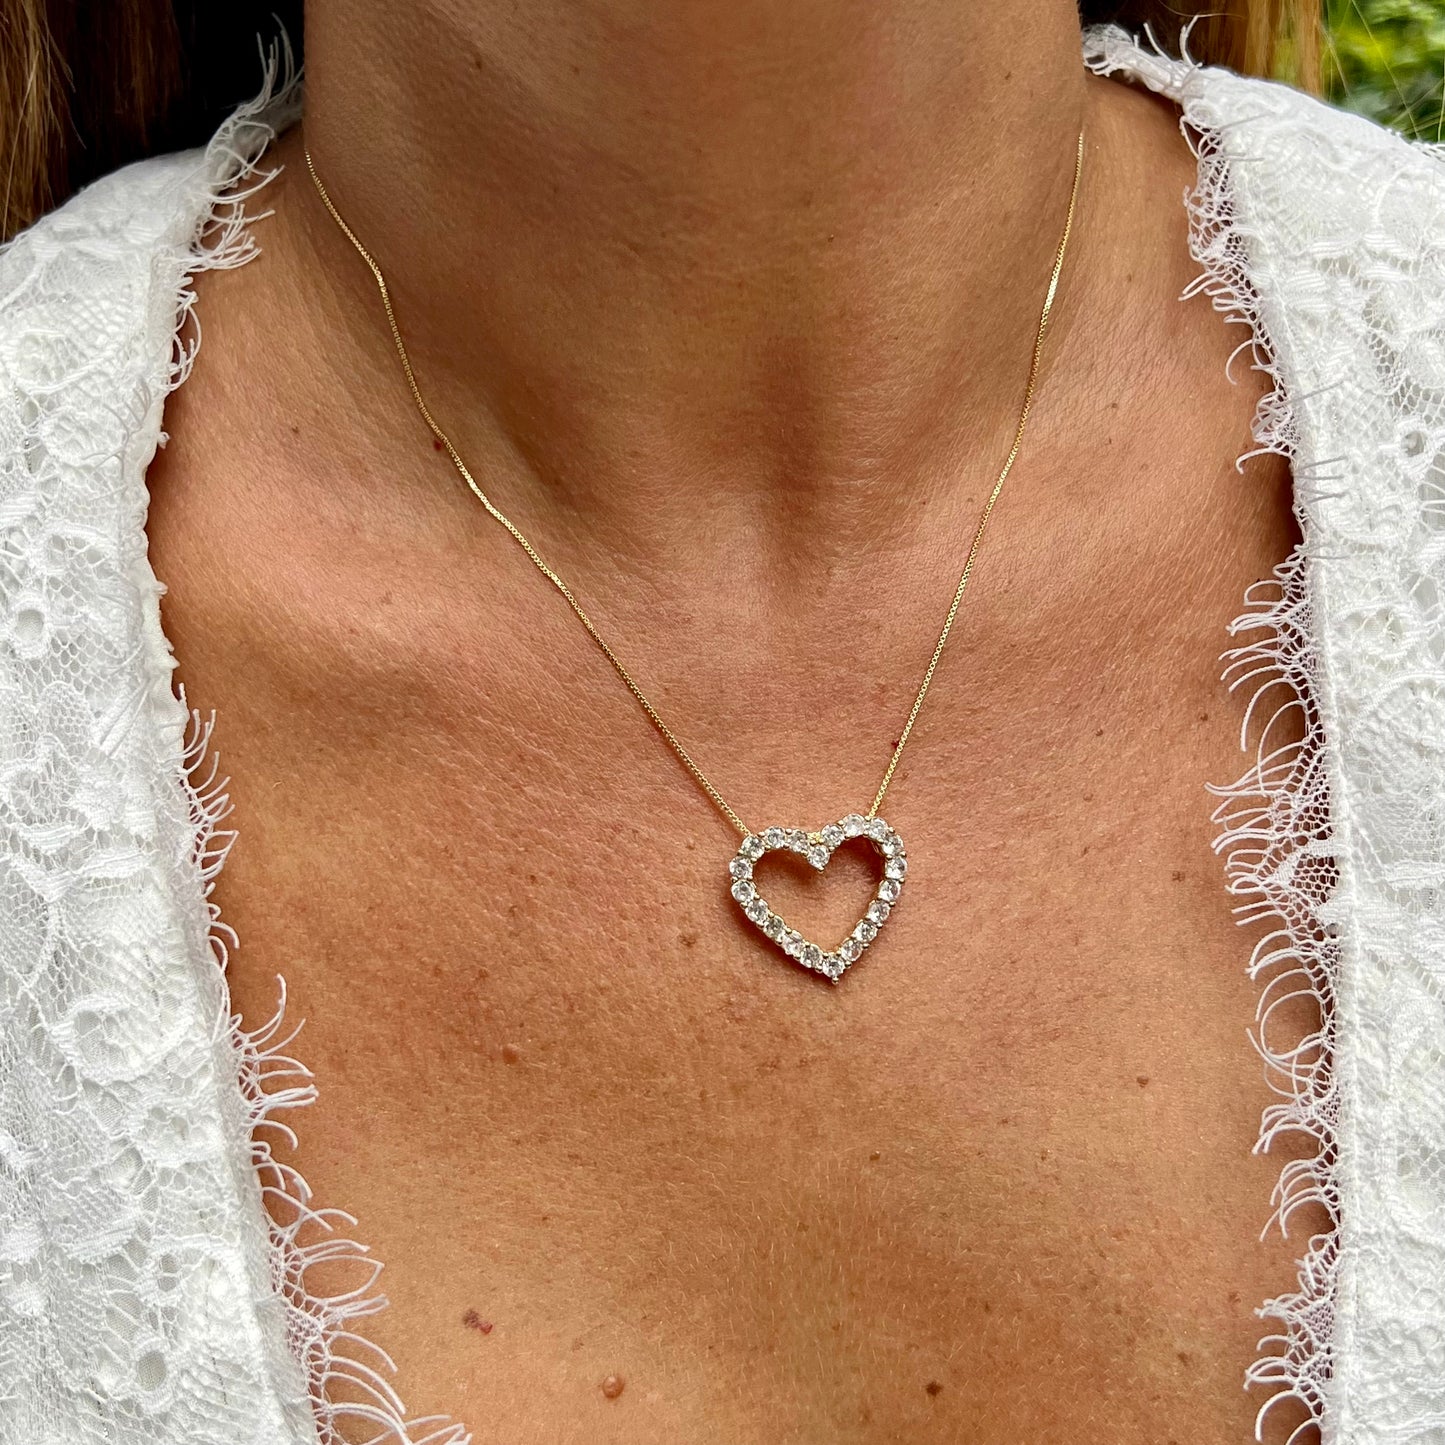 Heart Zirconia Necklace in Sterling Silver 925